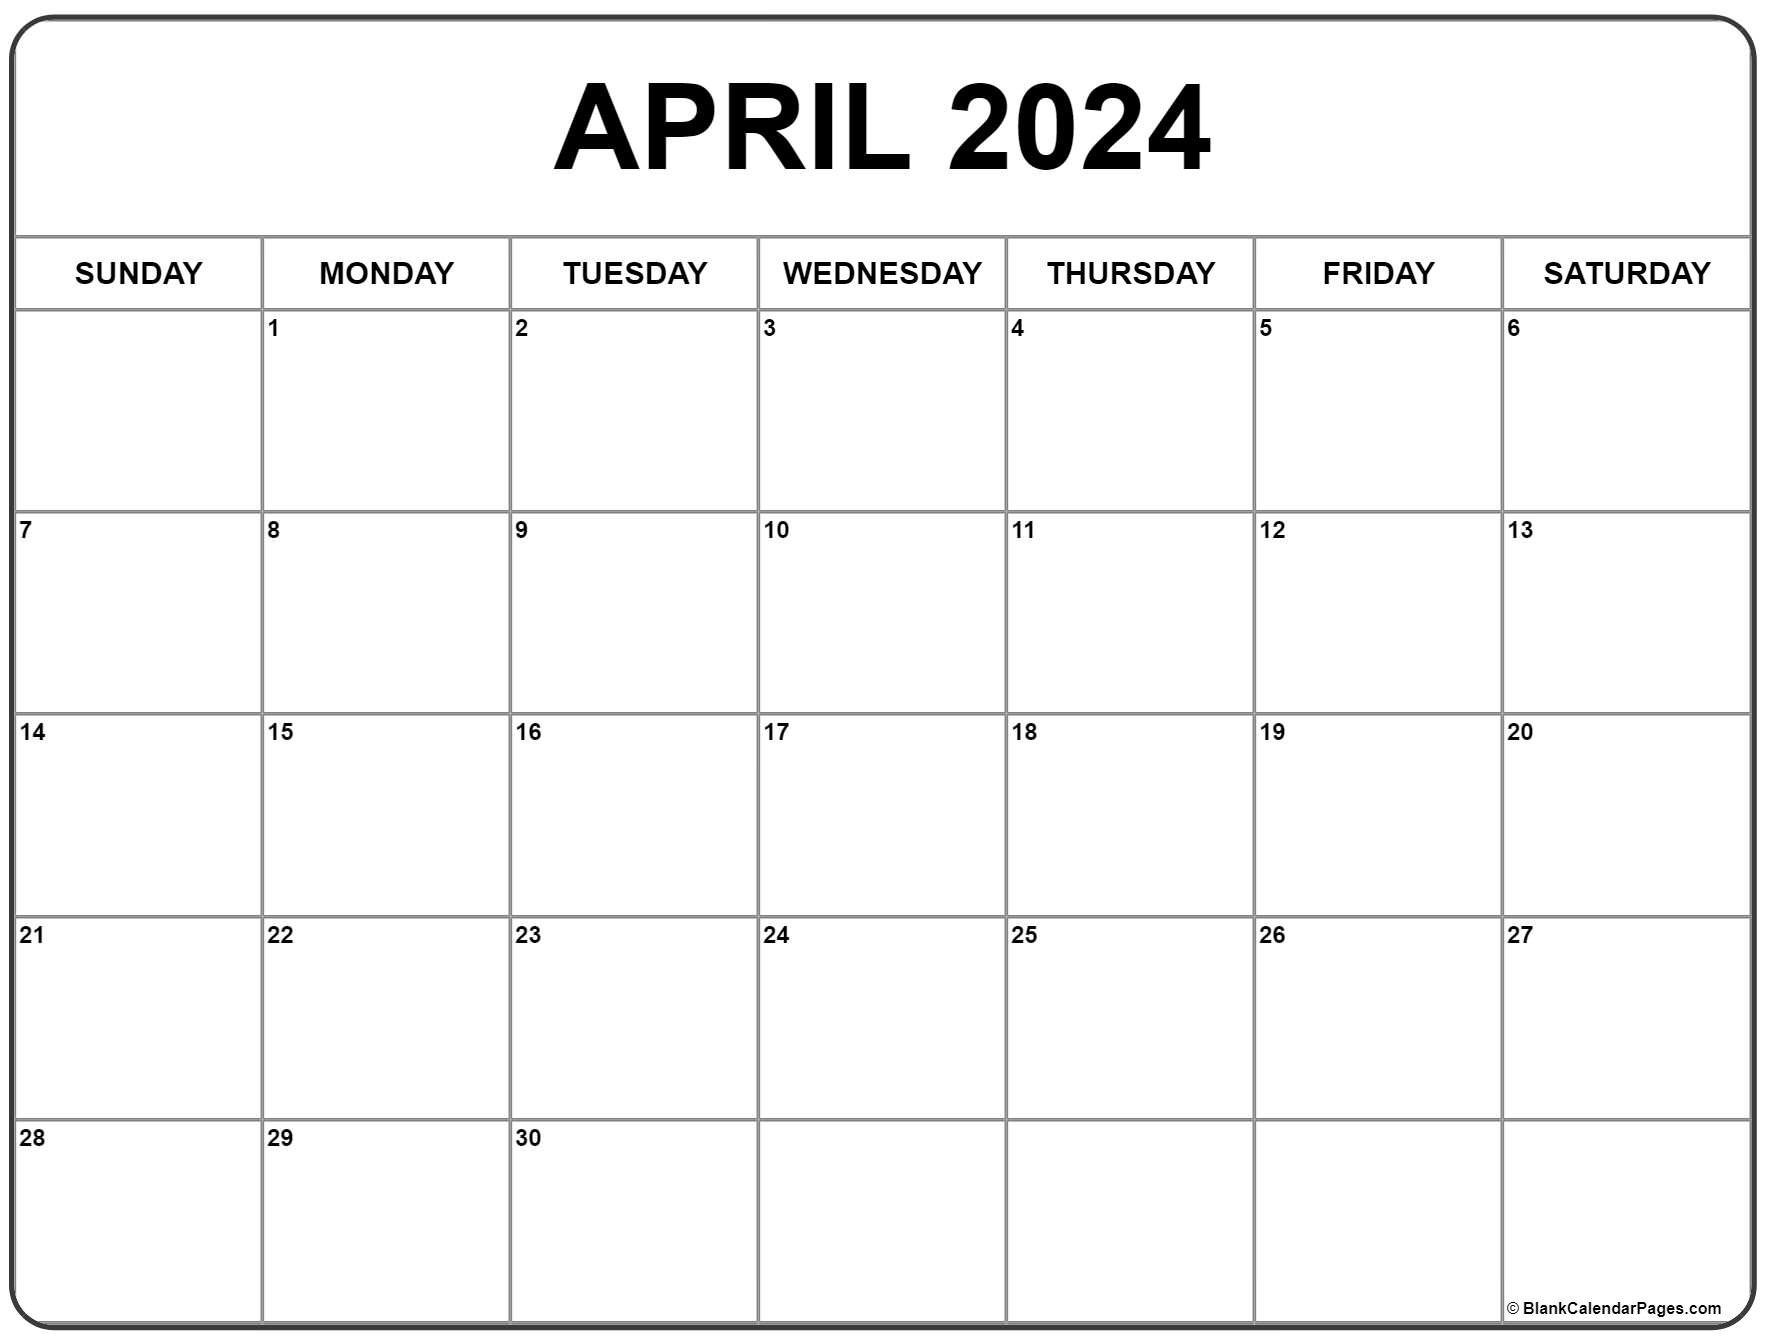 April 2024 Calendar | Free Printable Calendar for 2024 April Calendar Printable